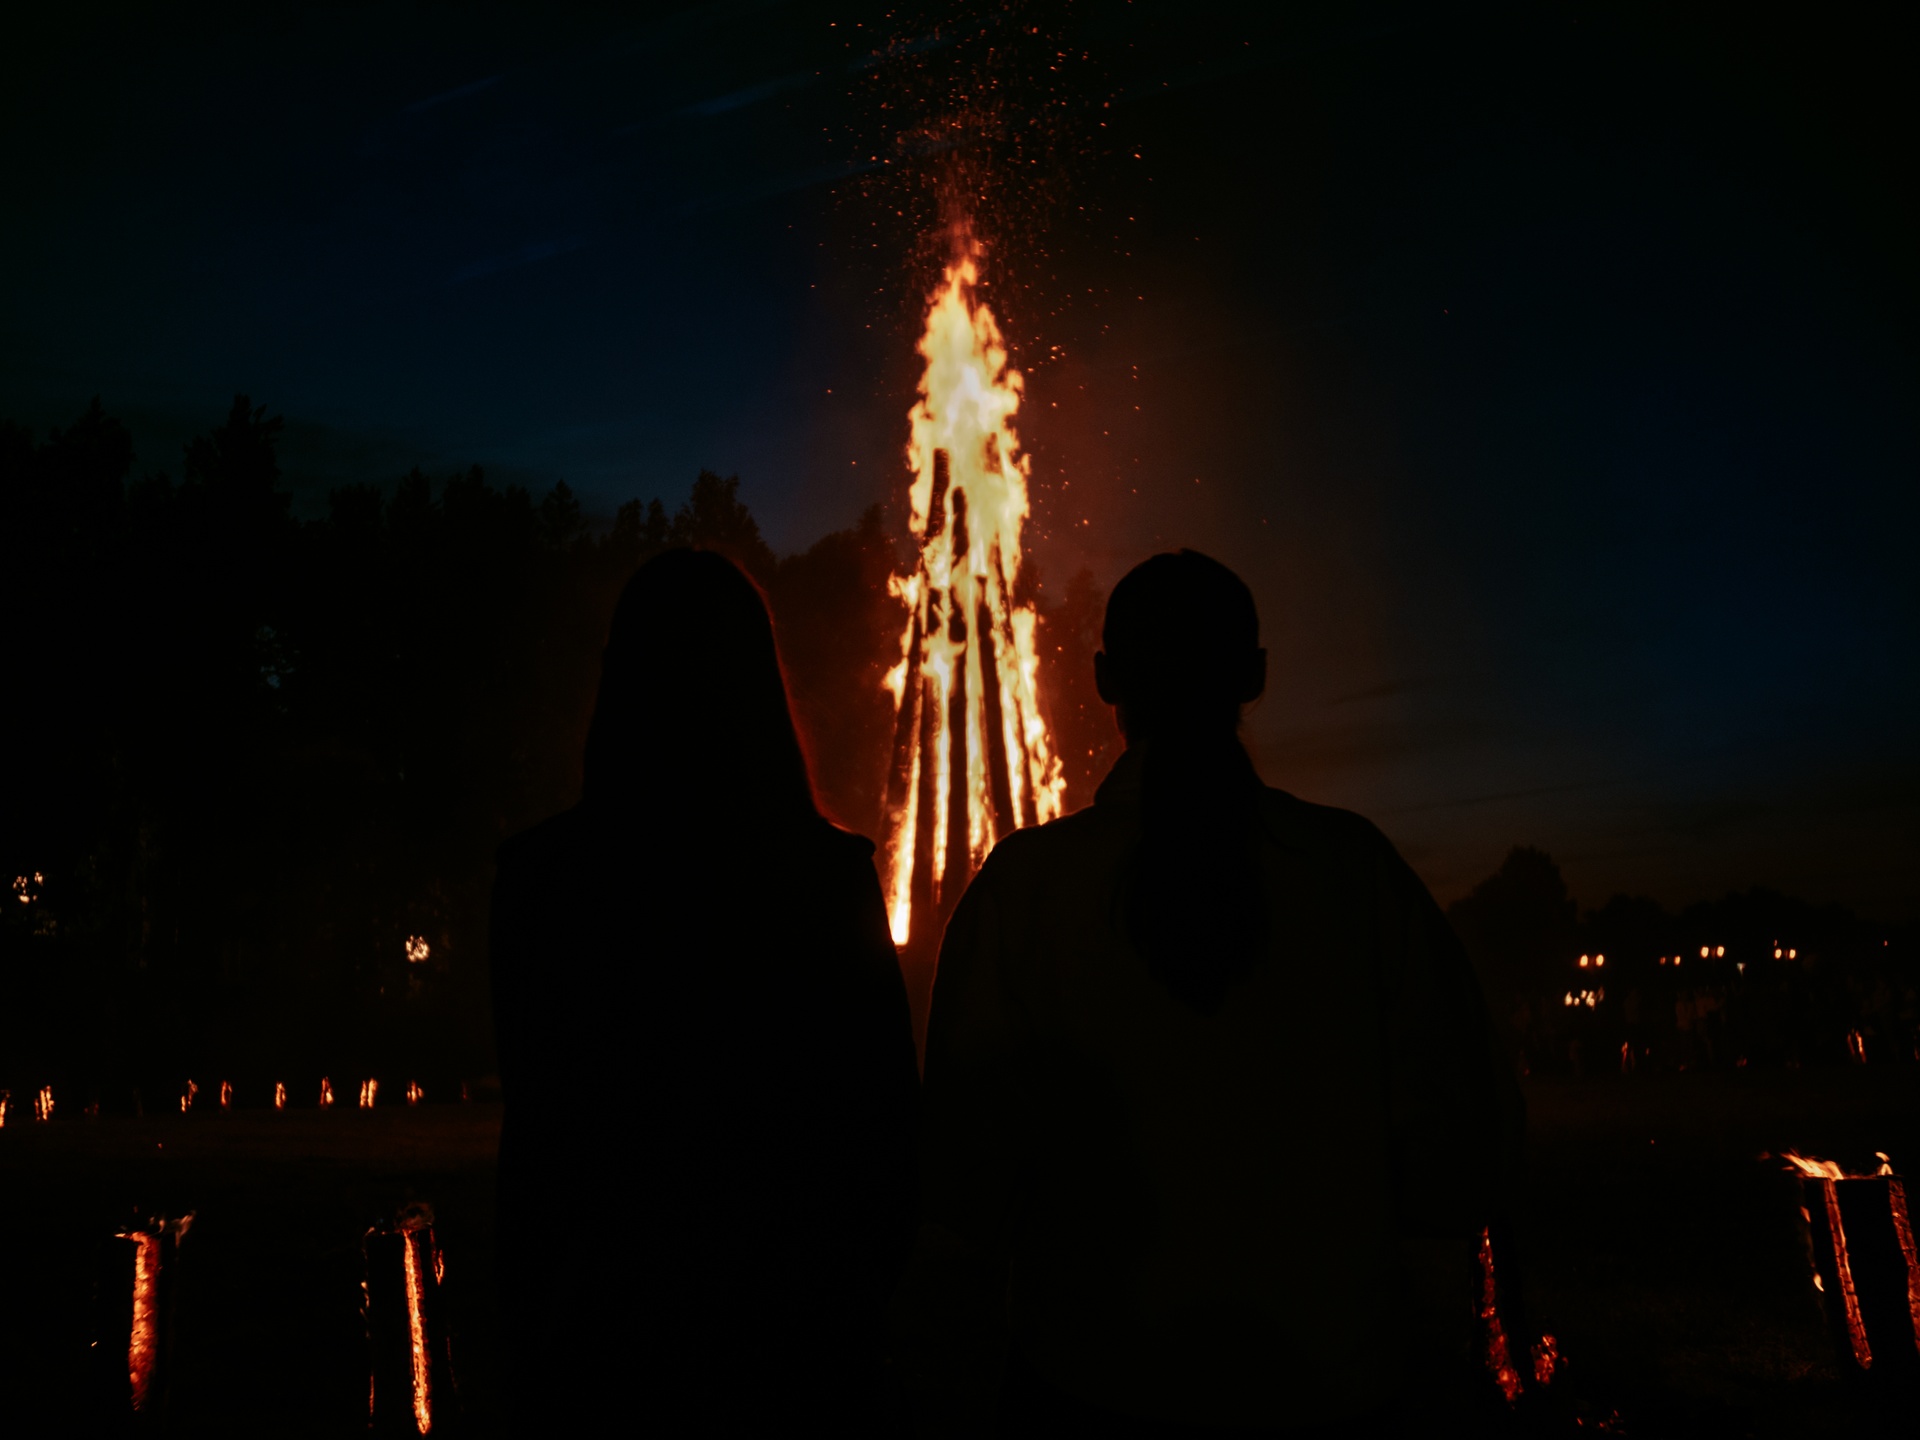 midsummer's bonfire